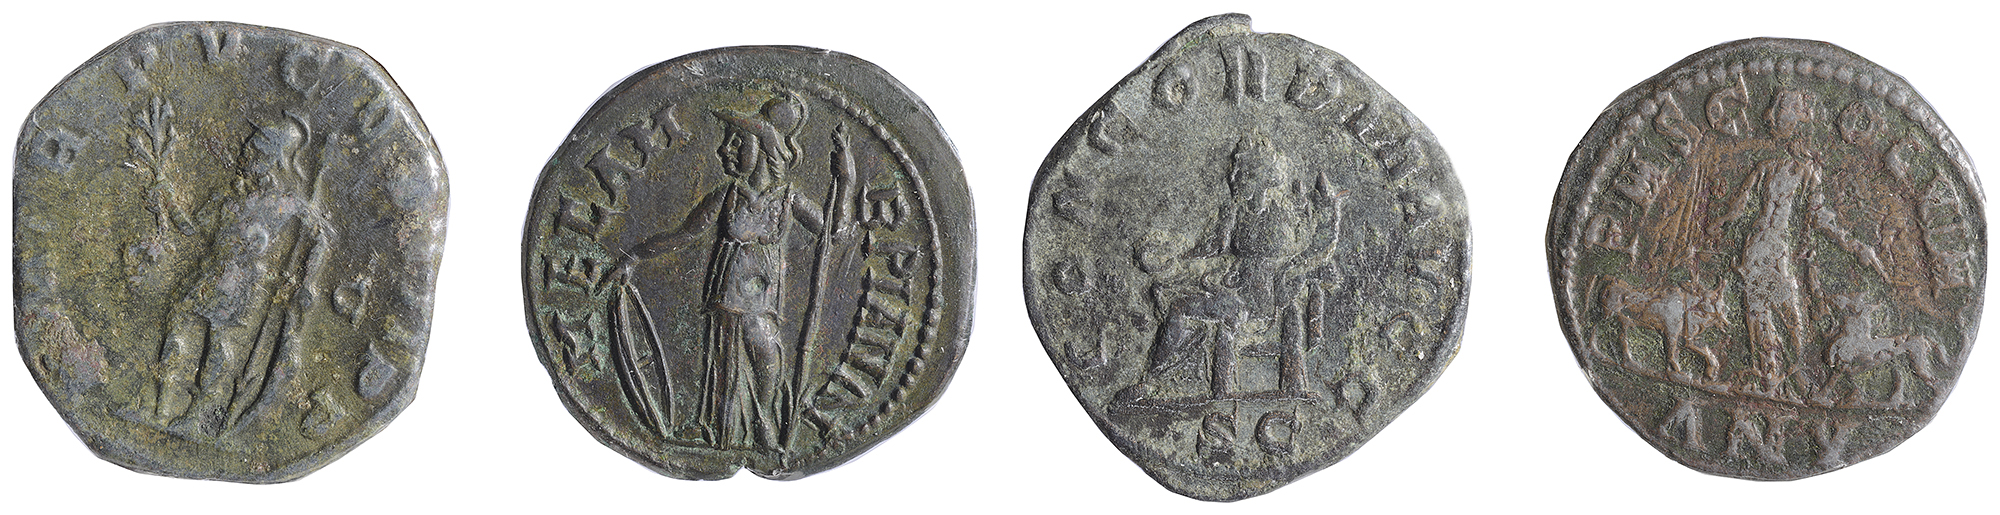 Philip I AE SestertiusRome, Struck 248 ADIMP M IVL PHILIPPVS AVG: Bust of Philip the Arab, laureate, - Image 2 of 2